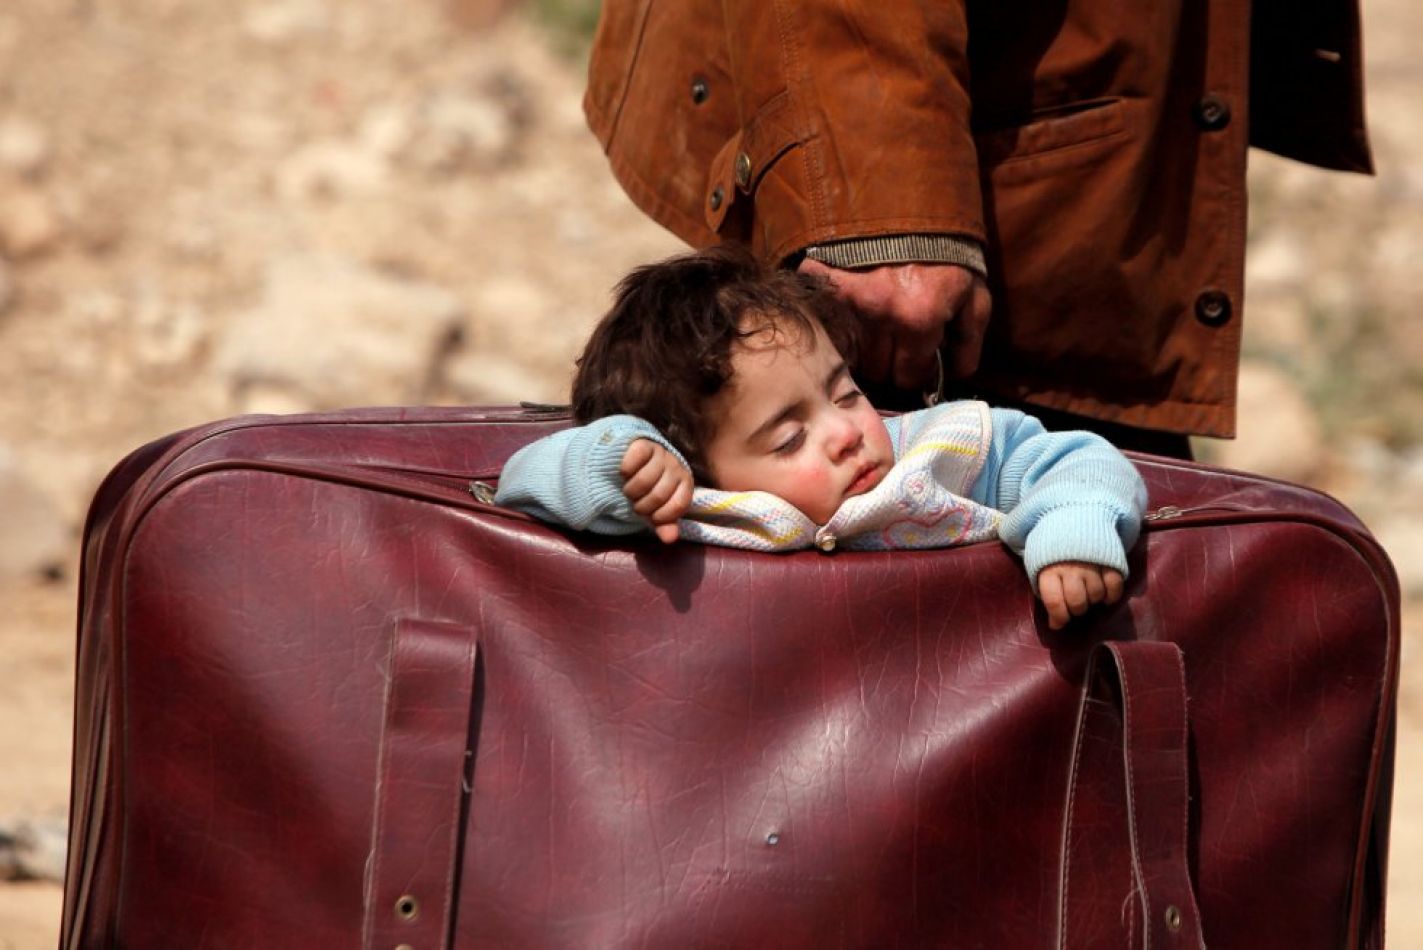 https://www.ahorasalta.com.ar/public/images/fotosdeldia/15-un-ninio-duerme-dentro-de-una-maleta-en-beit-sawa-siria.jpg